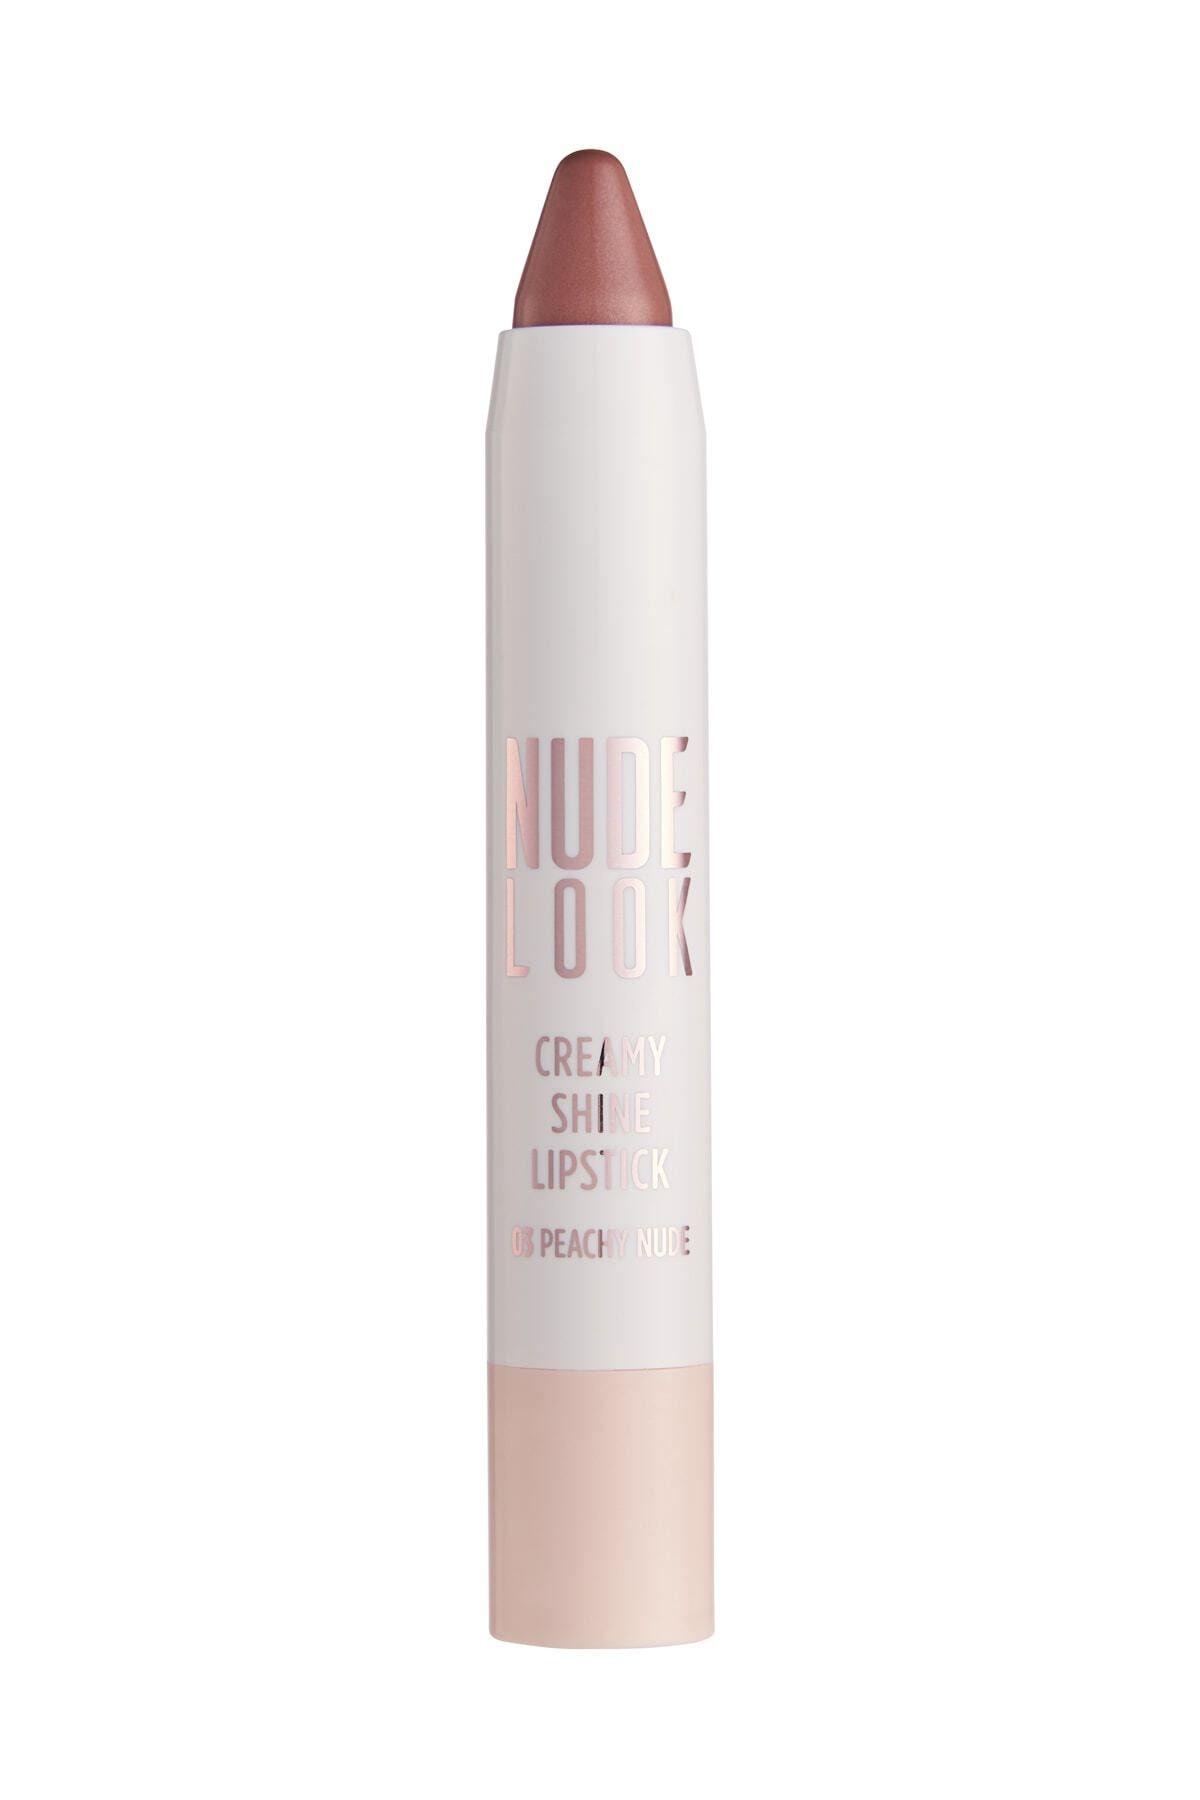 Golden Rose Nude Look Creamy Shine Lipstick No: 03 Peachy Nude - Kalem Ruj